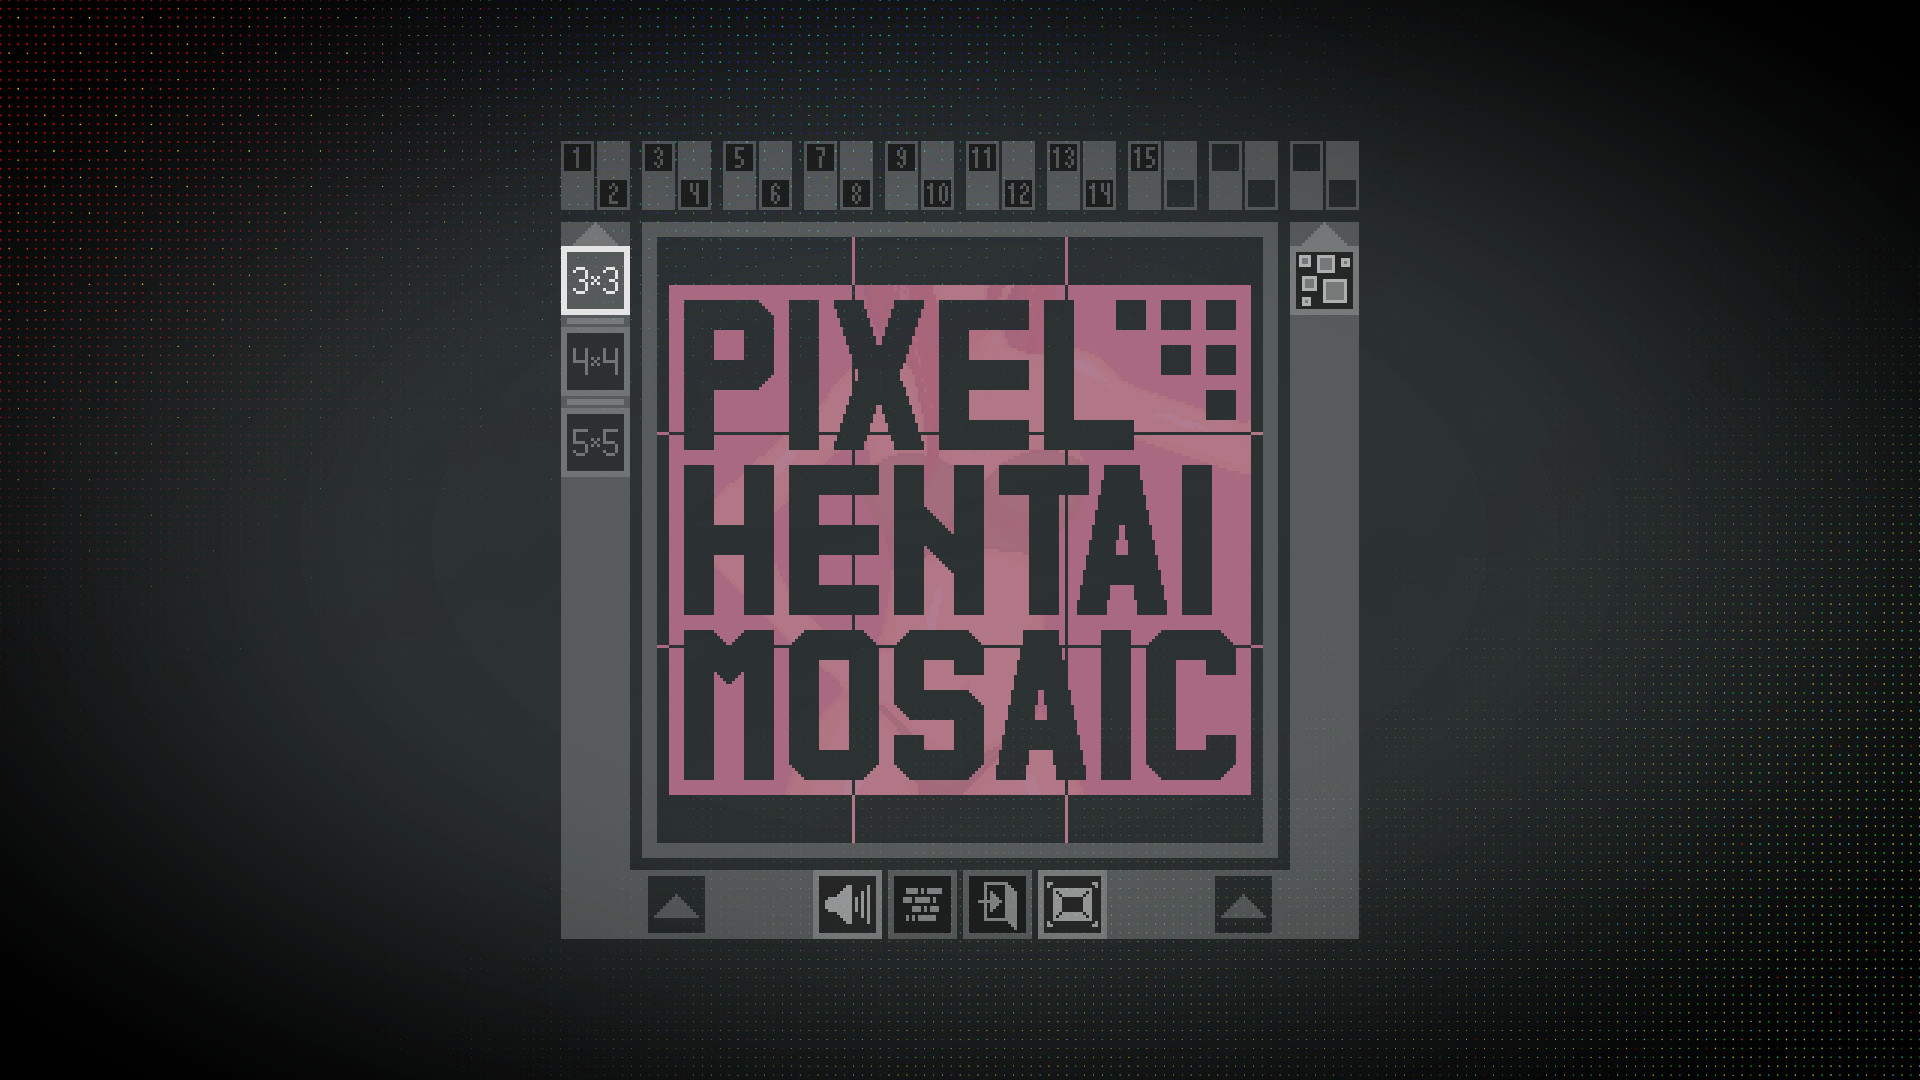 Pixel Hentai Mosaic Steam CD Key